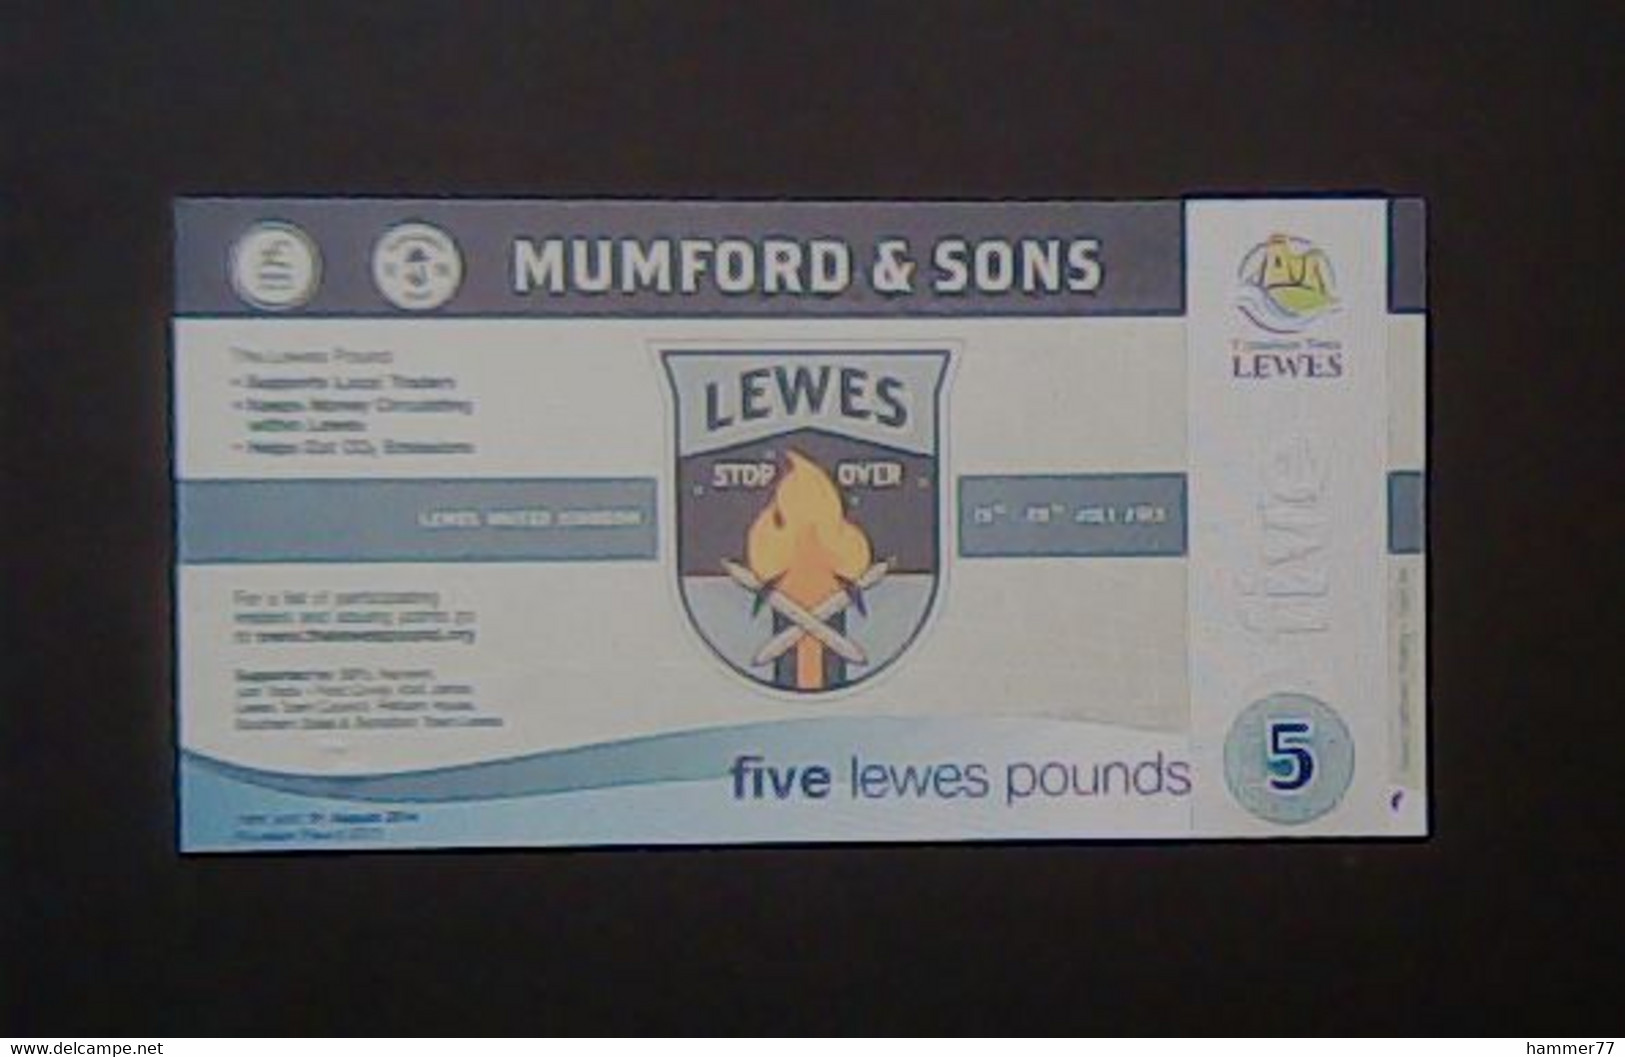 United Kingdom England 2013: Lewes £5 Mumford & Sons Edition Unc - 5 Pounds